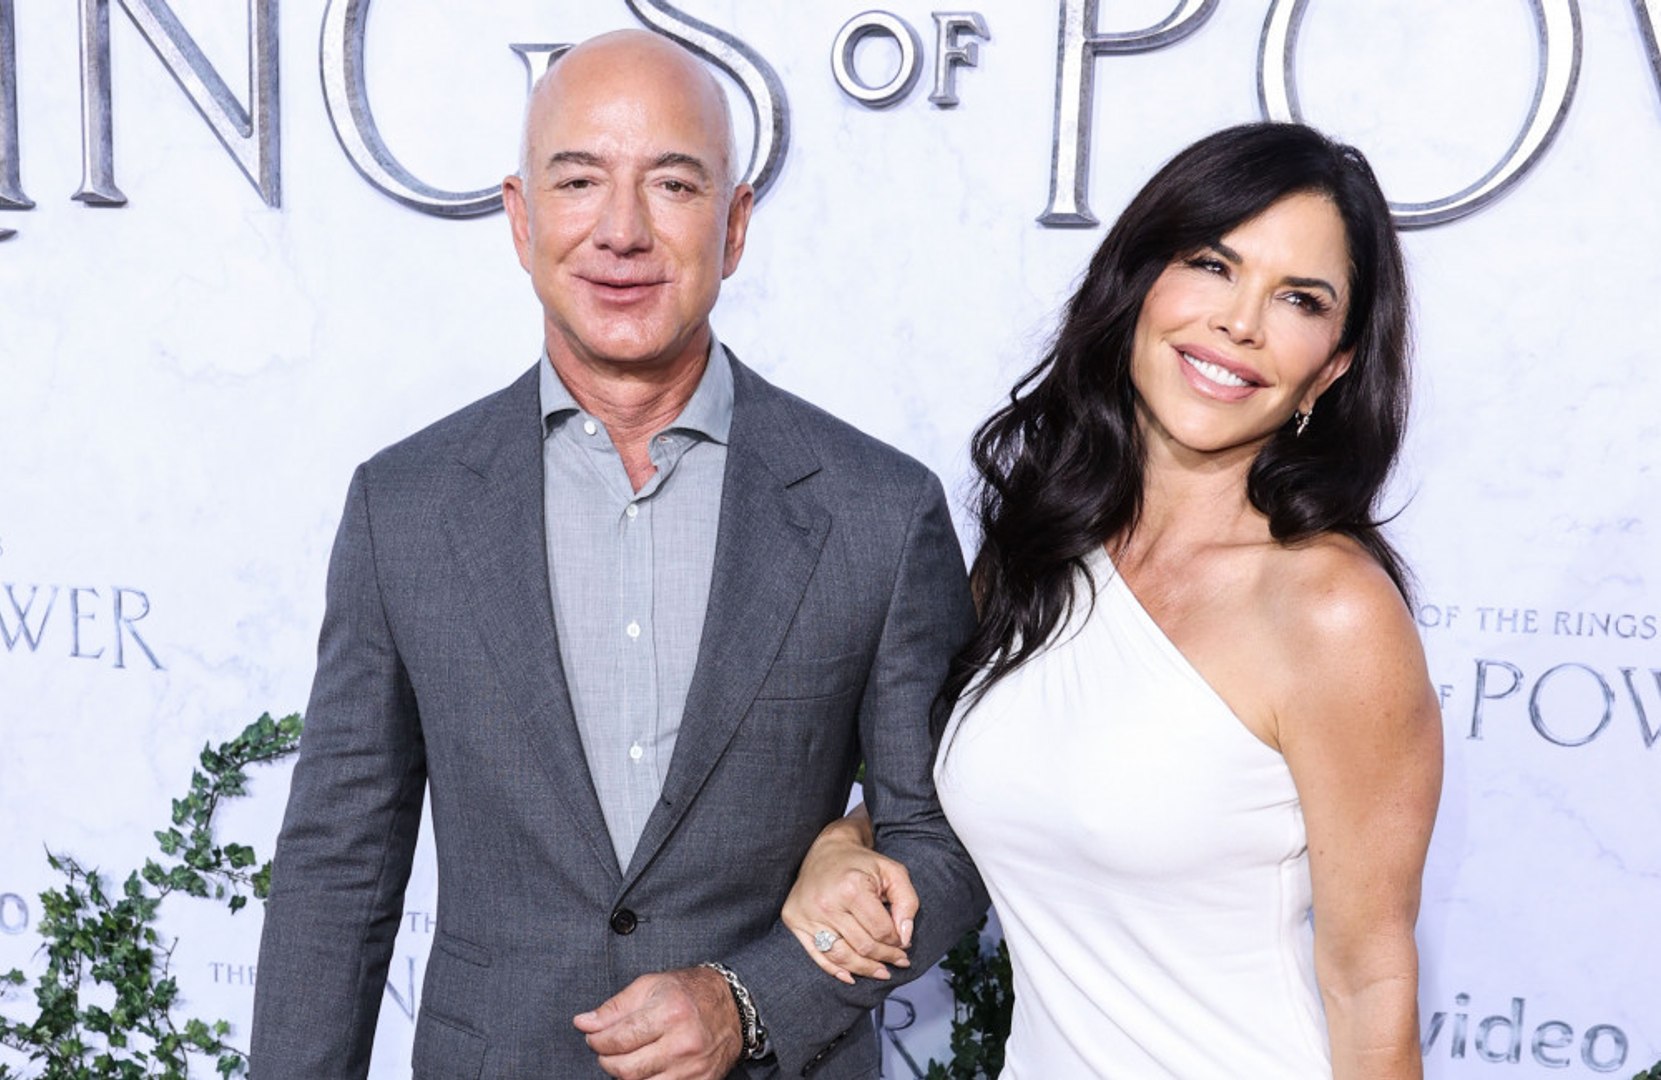 ⁣Jeff Bezos has regained his spot as the planet’s richest person